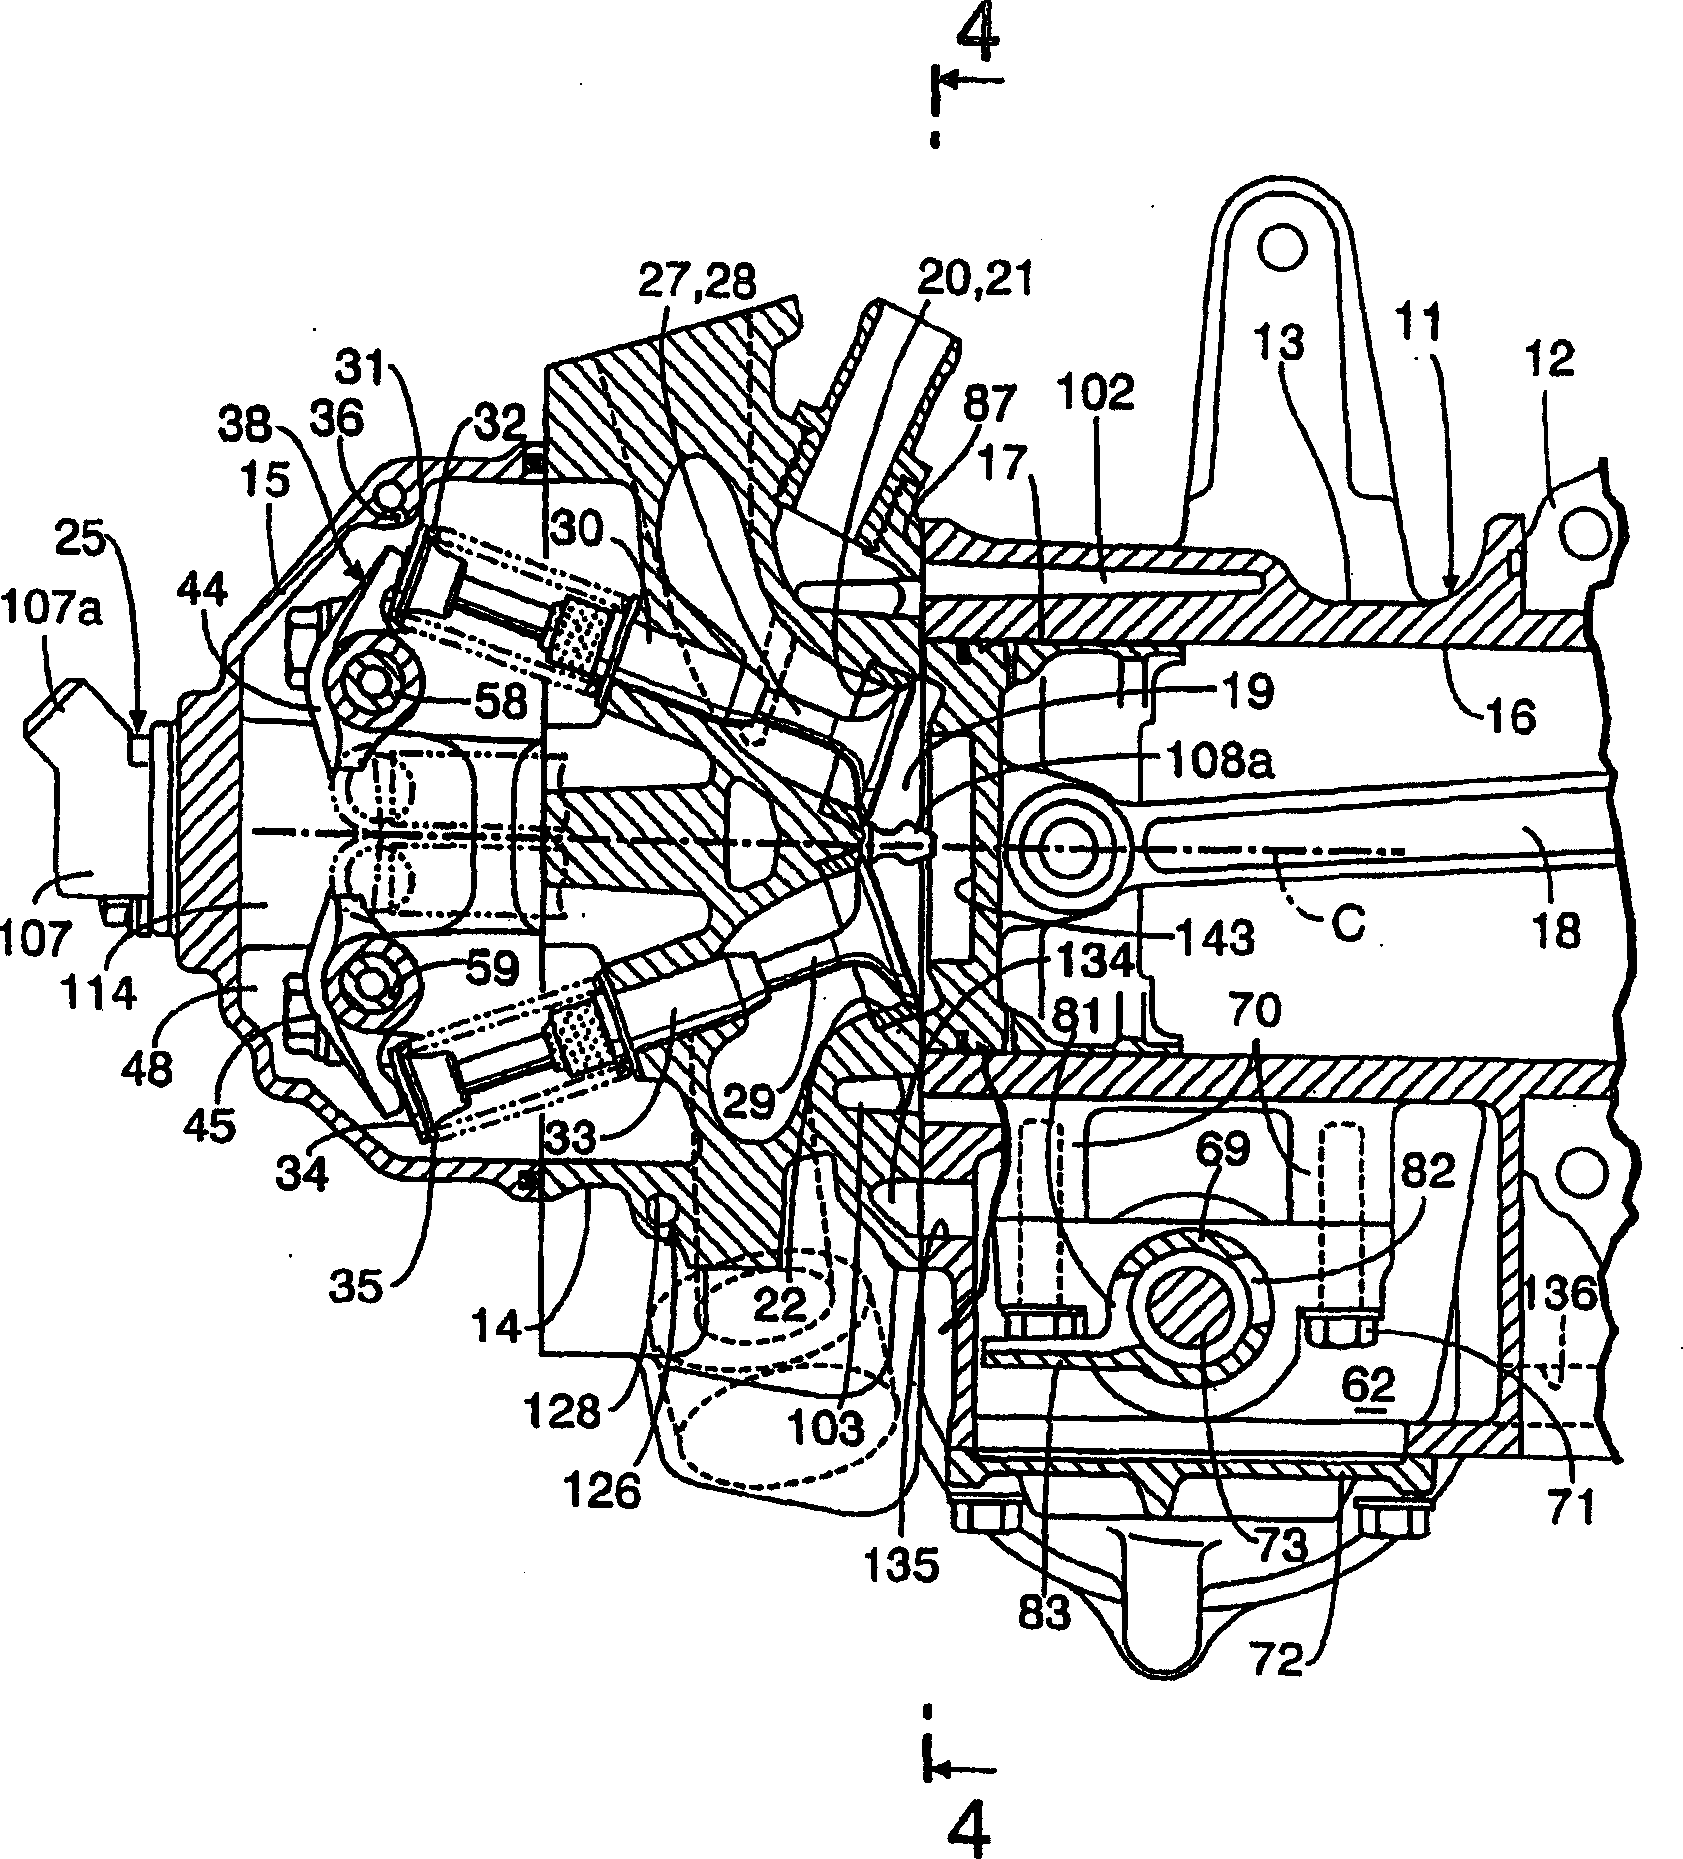 Four-stroke engine